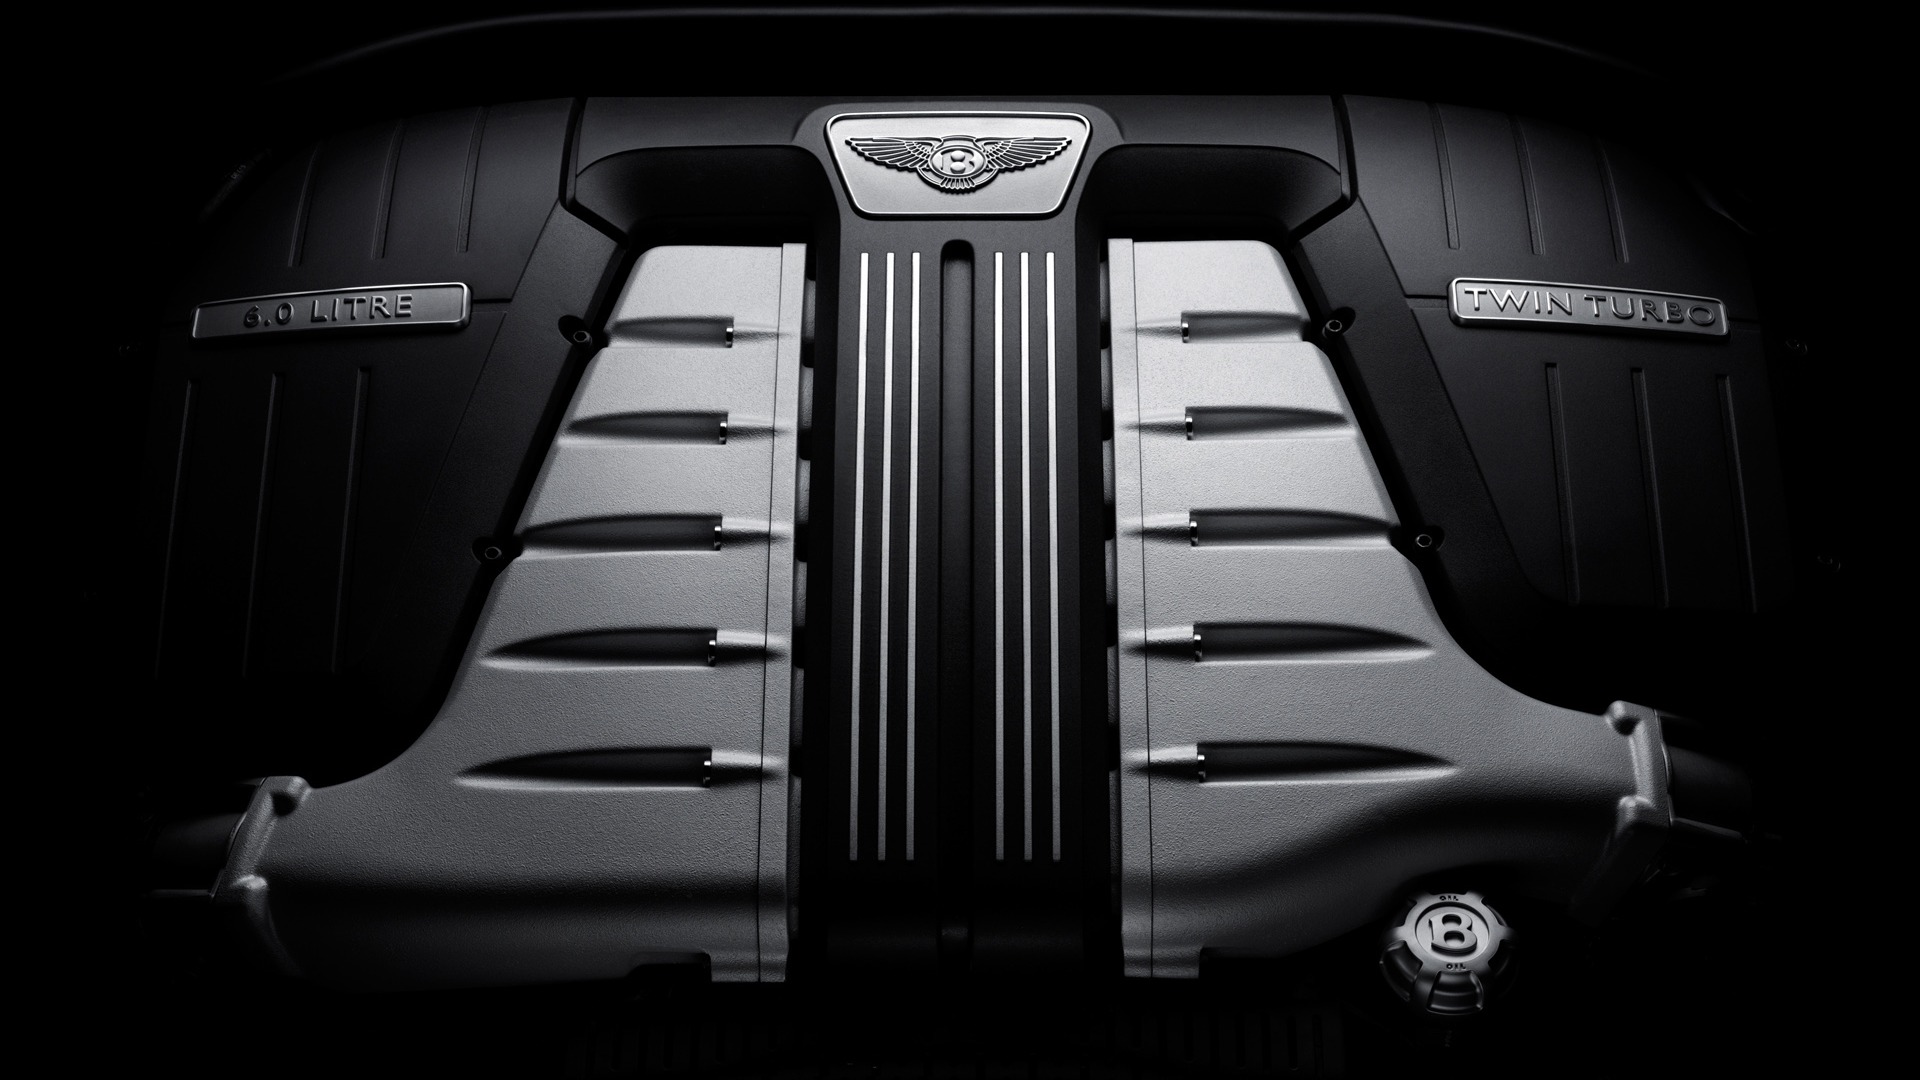 Bentley Continental GT - 2010 賓利 #33 - 1920x1080